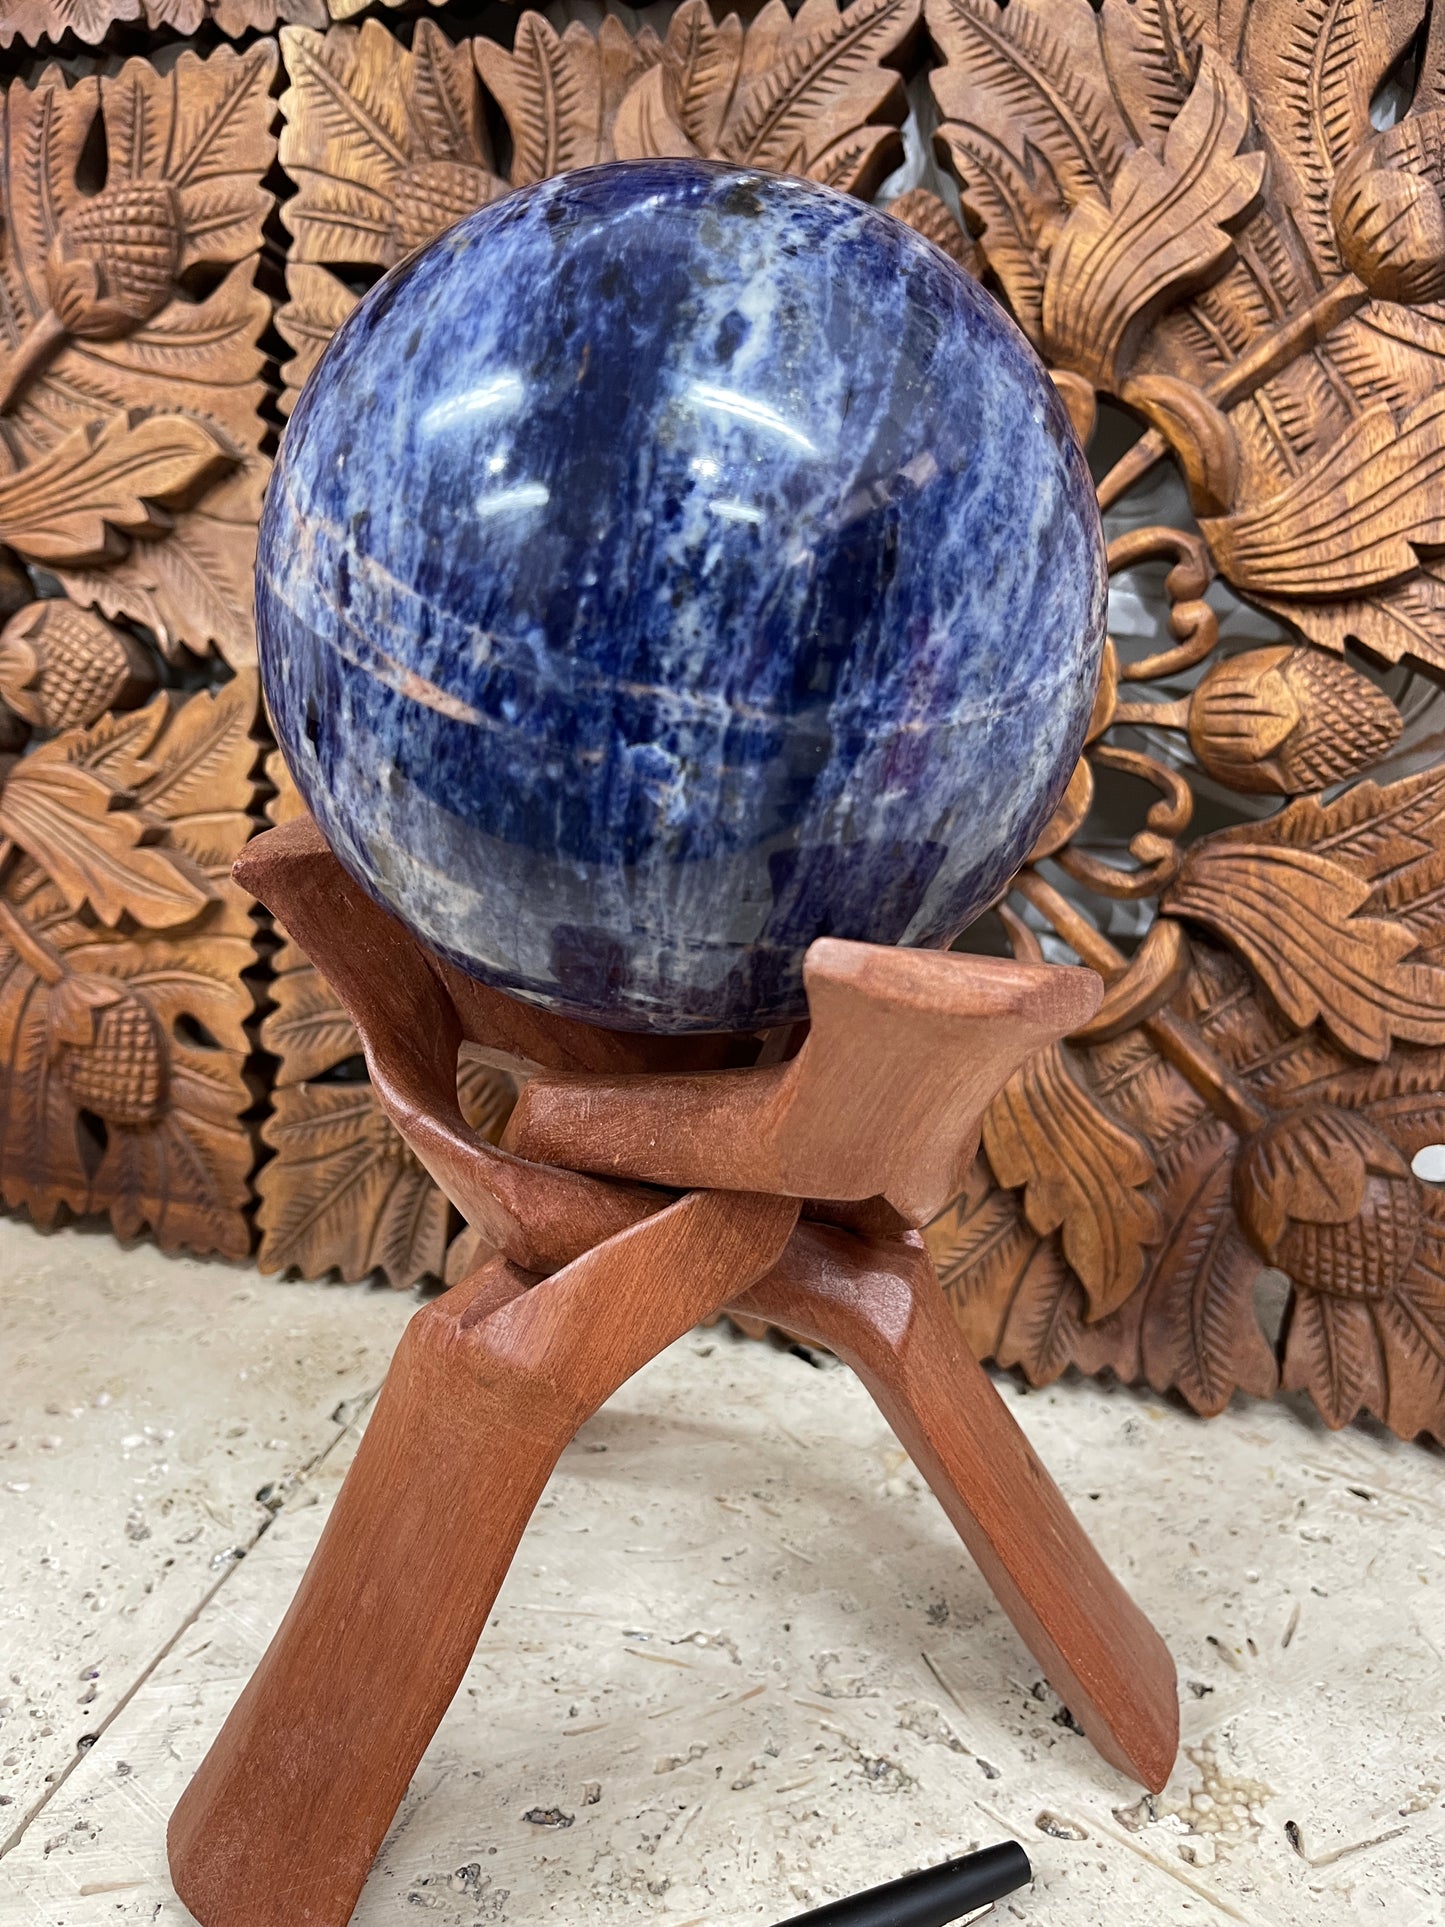 XXL Sodalite Sphere from India - 3.6 Kilos